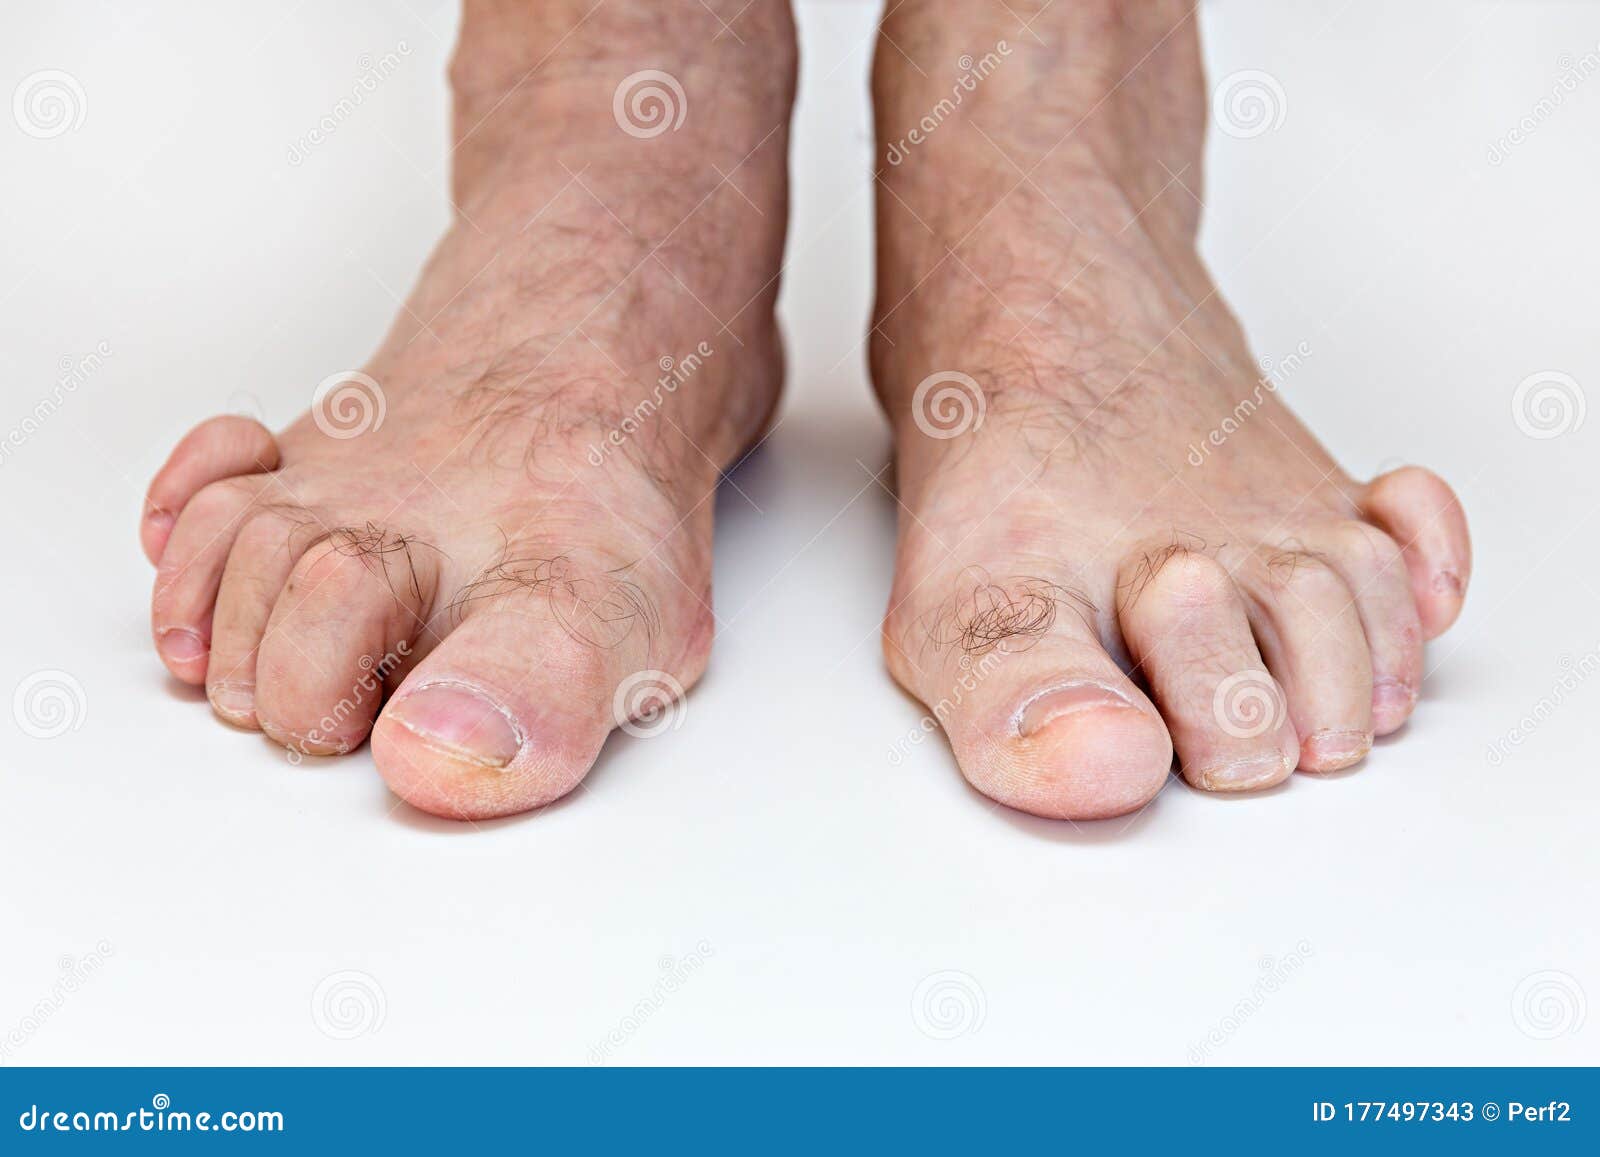 hammer toe feet